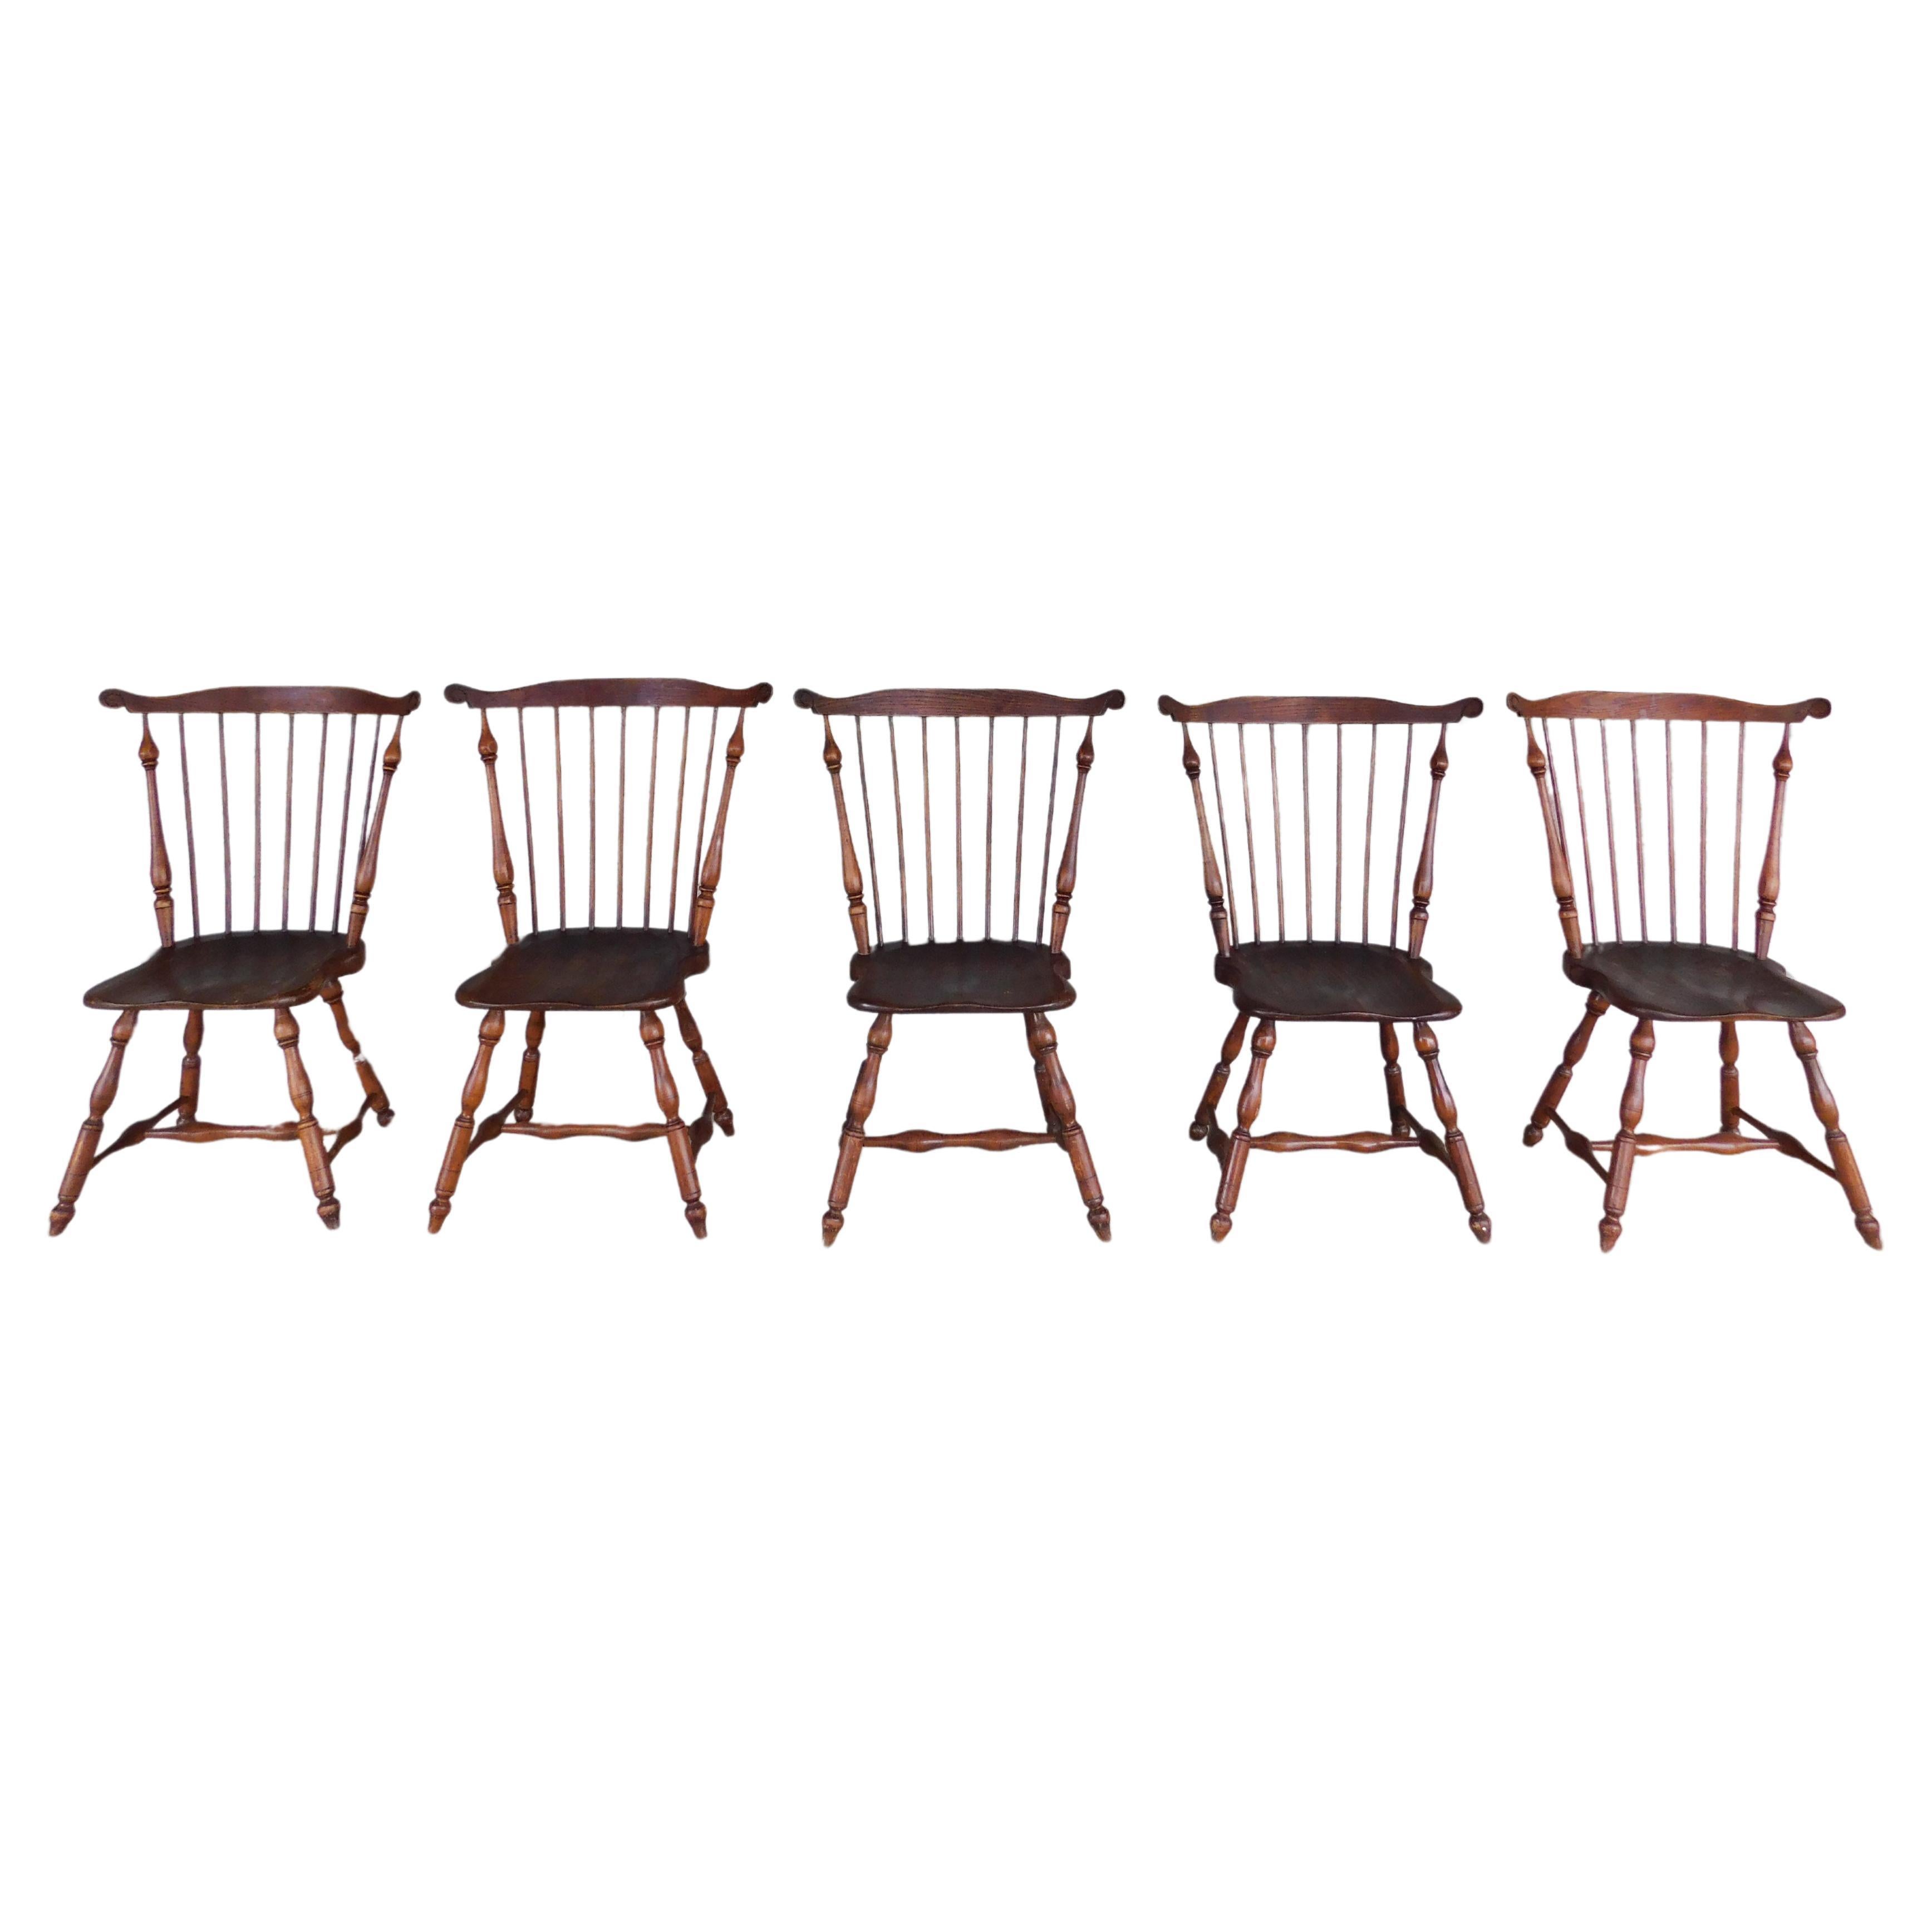 Antique Windsor Fan Back Side Chairs - Set of 5